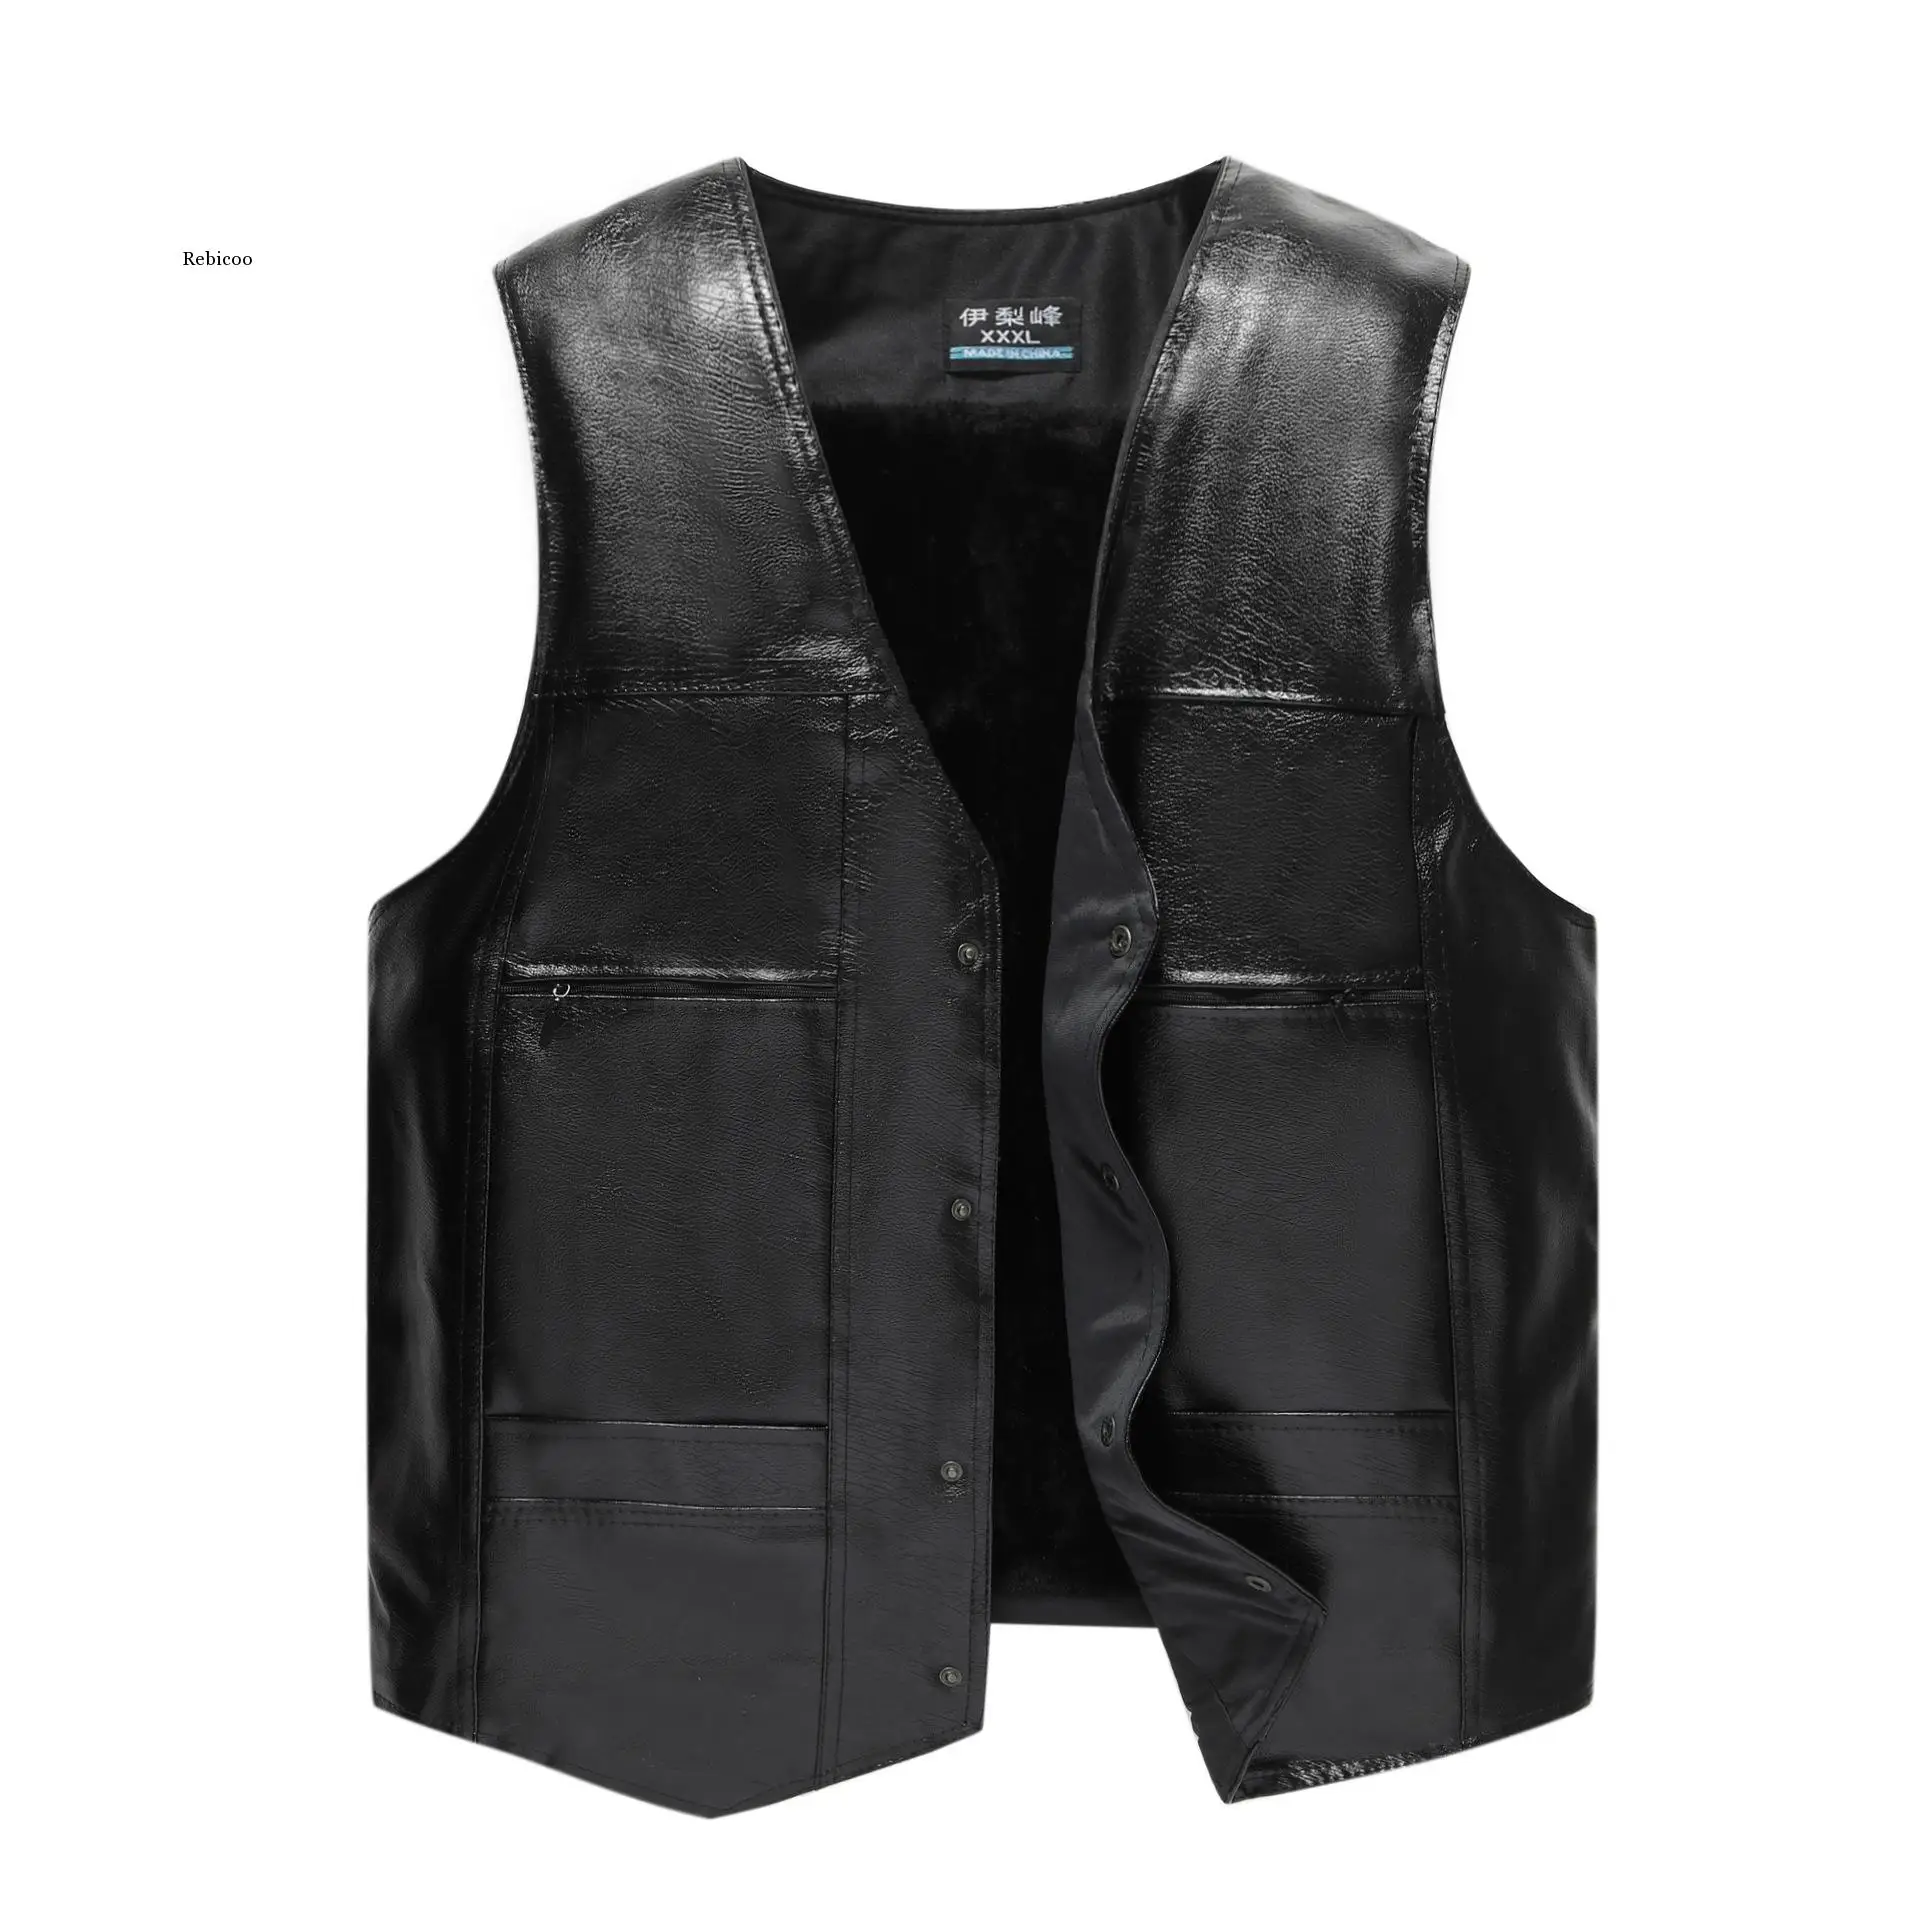 More Men's Pu Leather Vest Fashion V-Neck Warm Vest